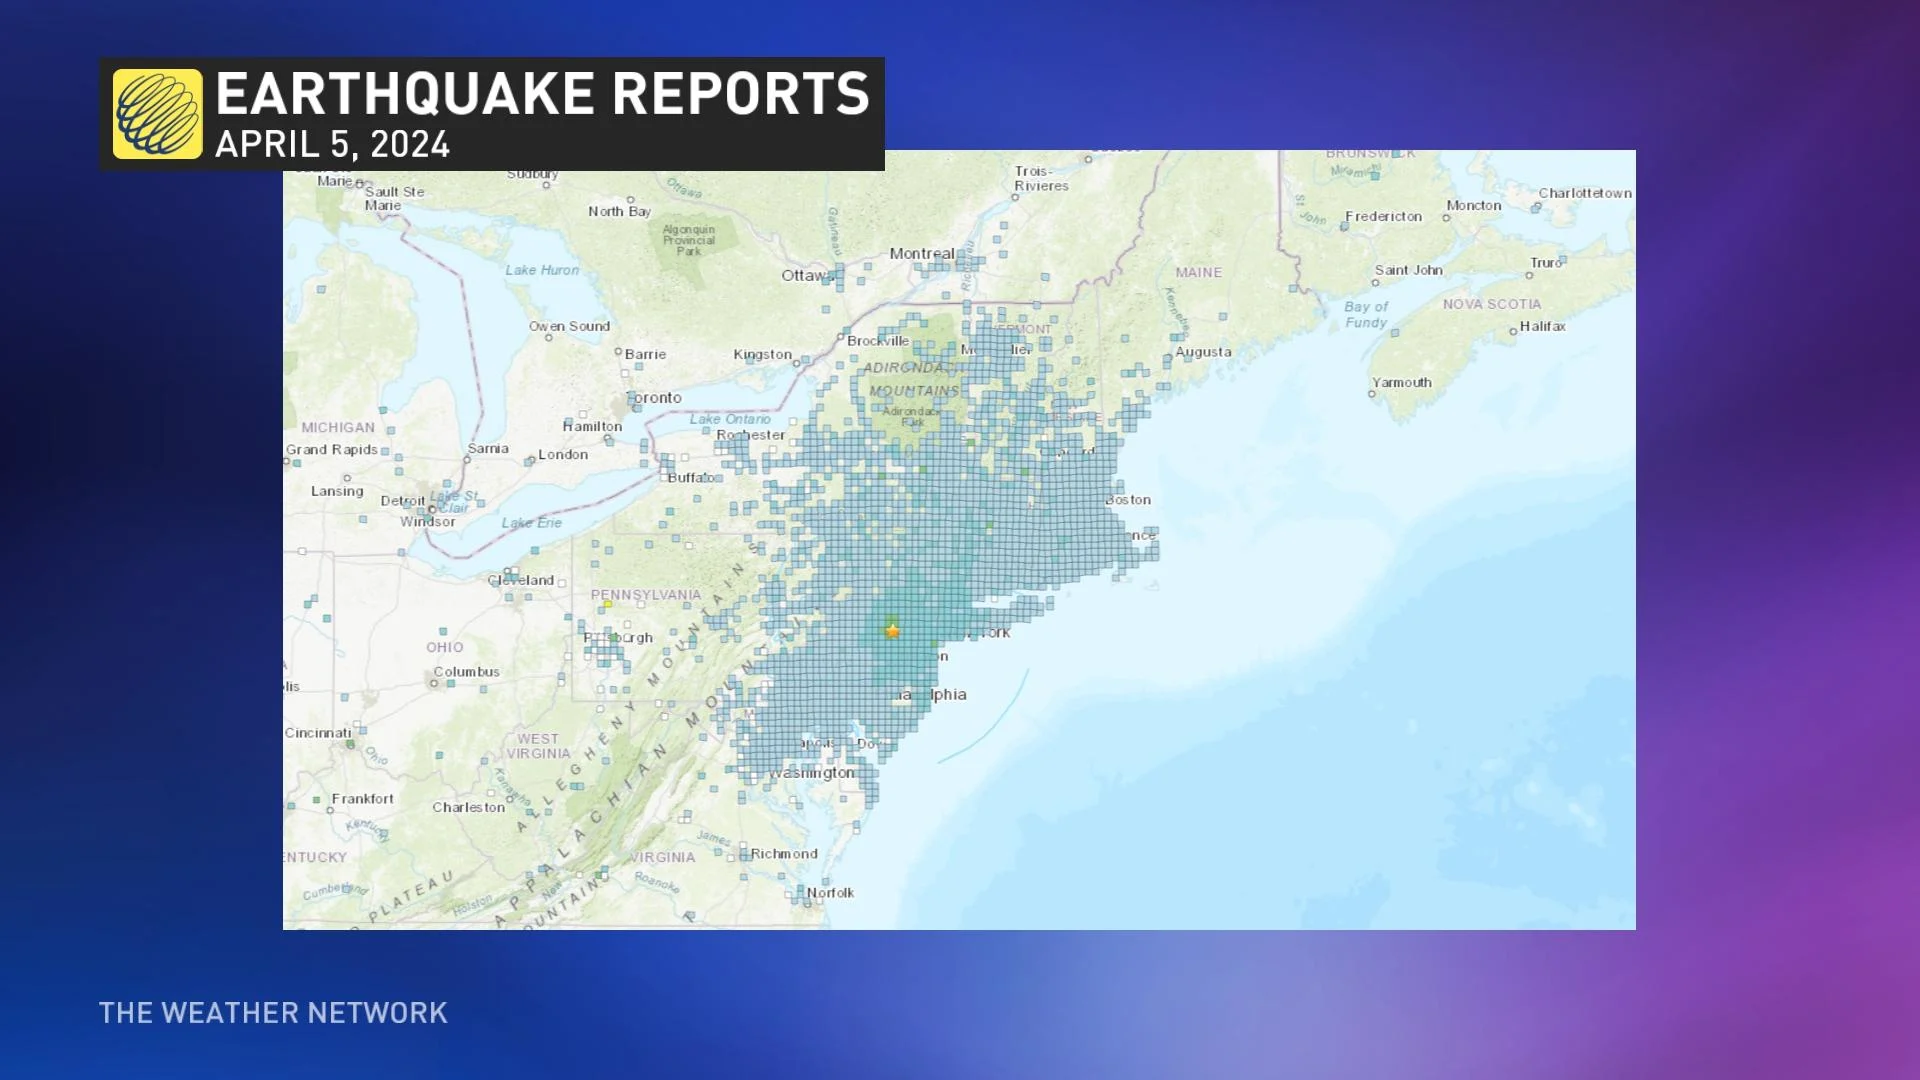 Baron - New Jersey earthquake reports - April 5